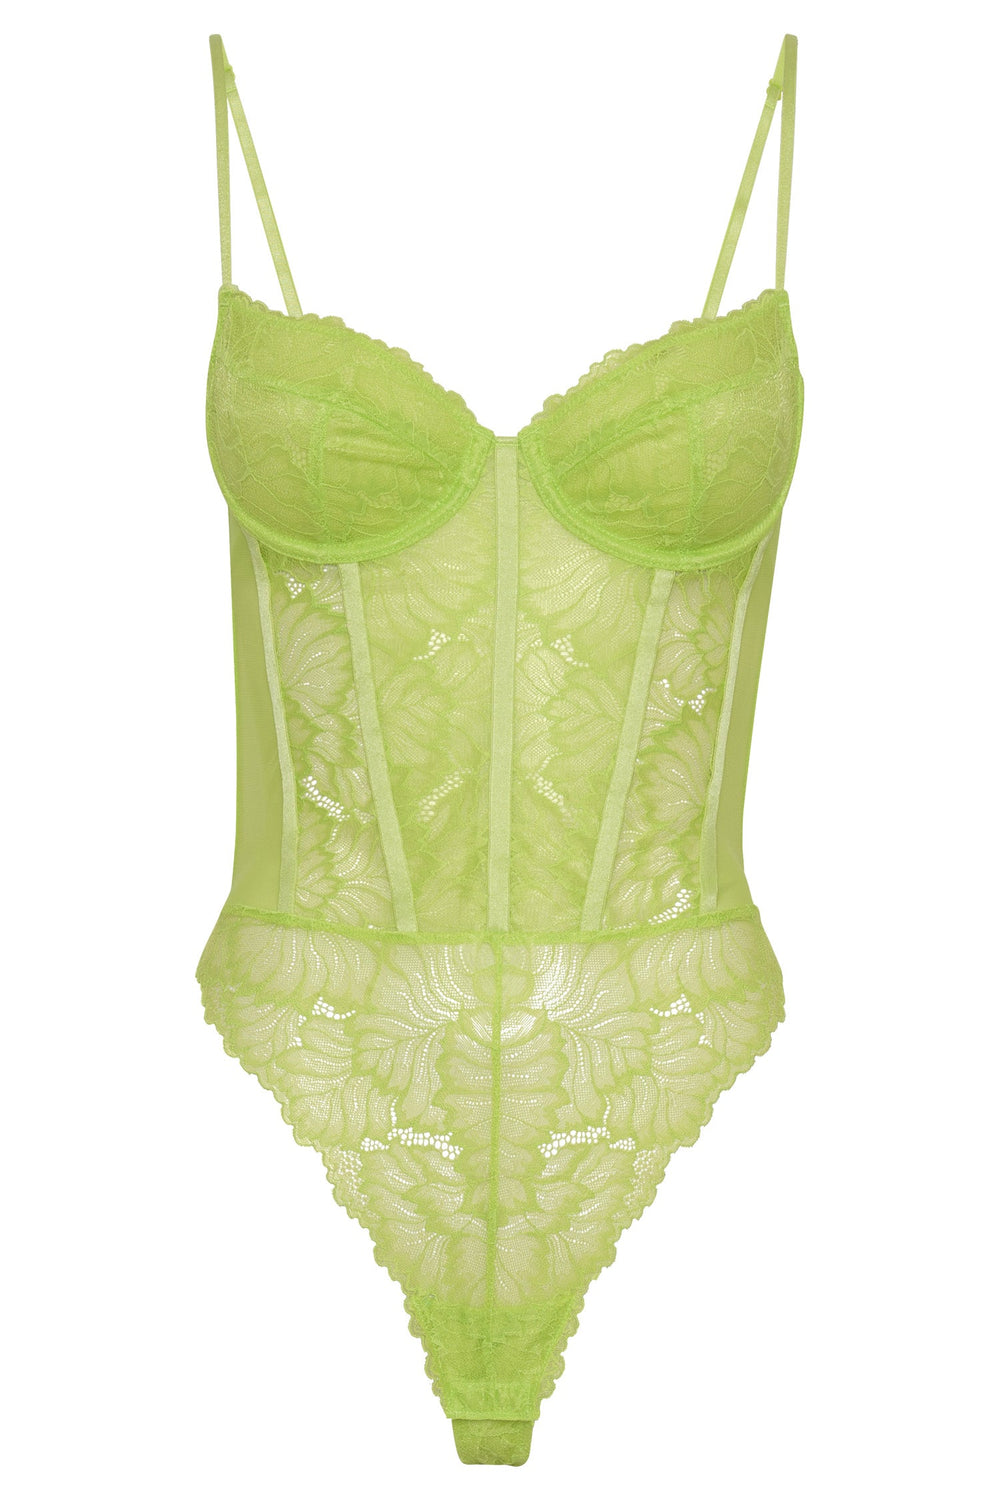 Daisy Lace Mesh Bodysuit - Lime Green